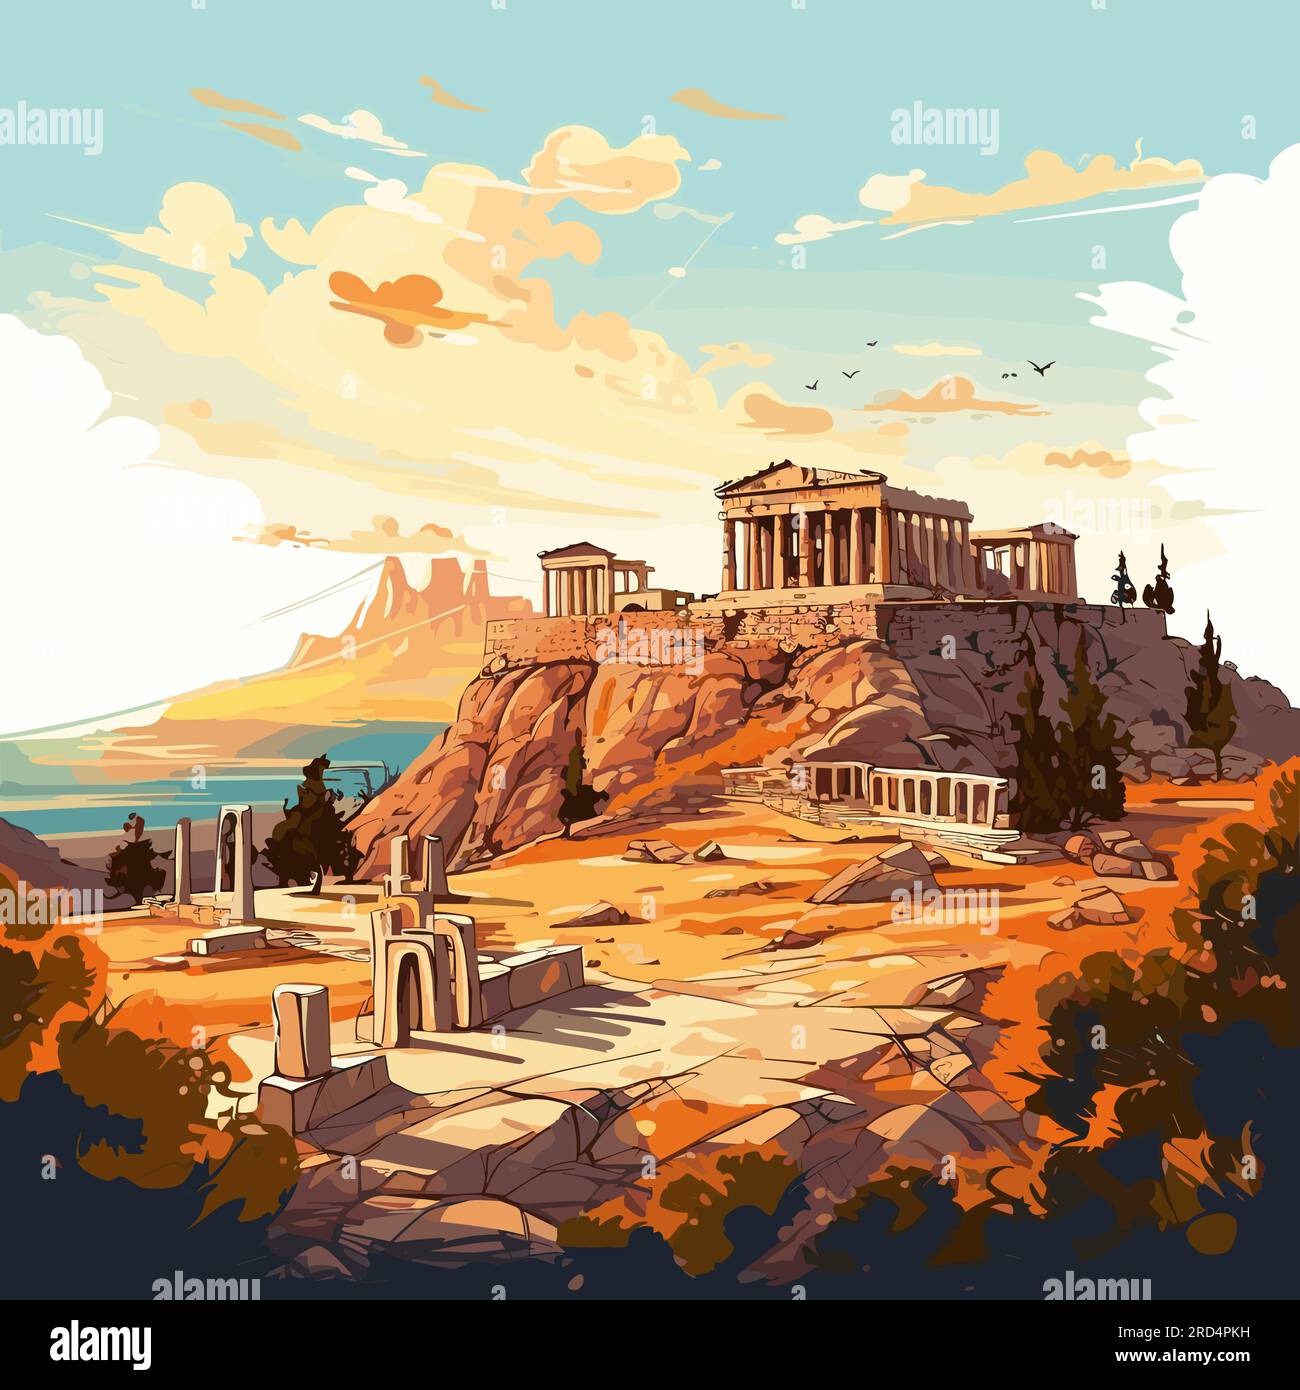 Acropolis. Acropolis hand-drawn comic illustration. Vector doodle style ...